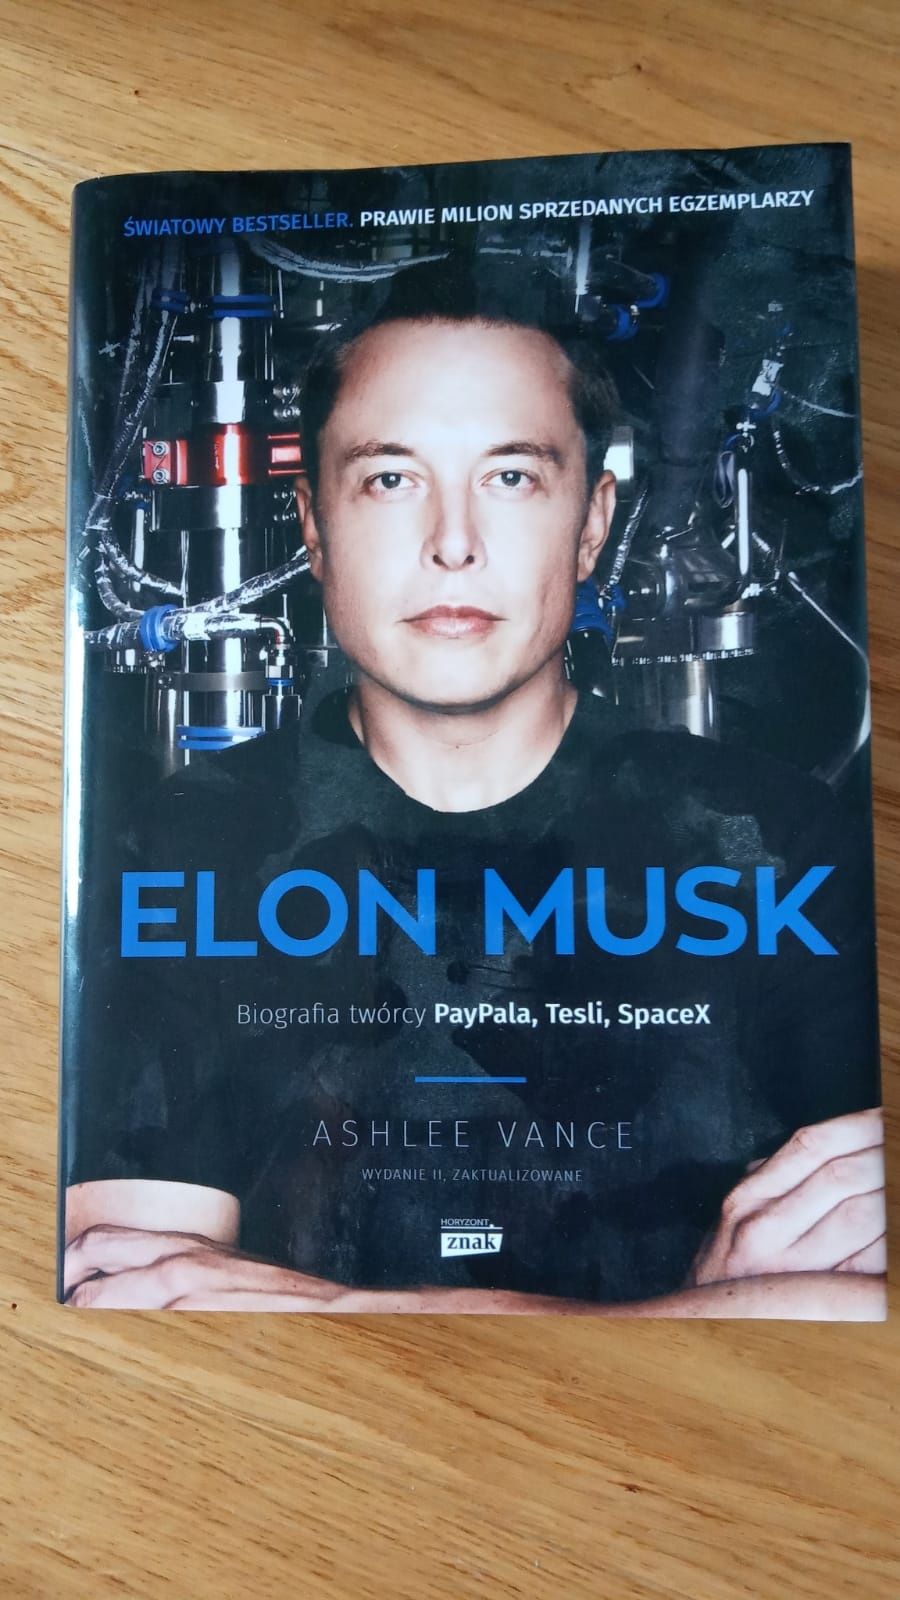 Elon Musk Biografia Ashlee Vance